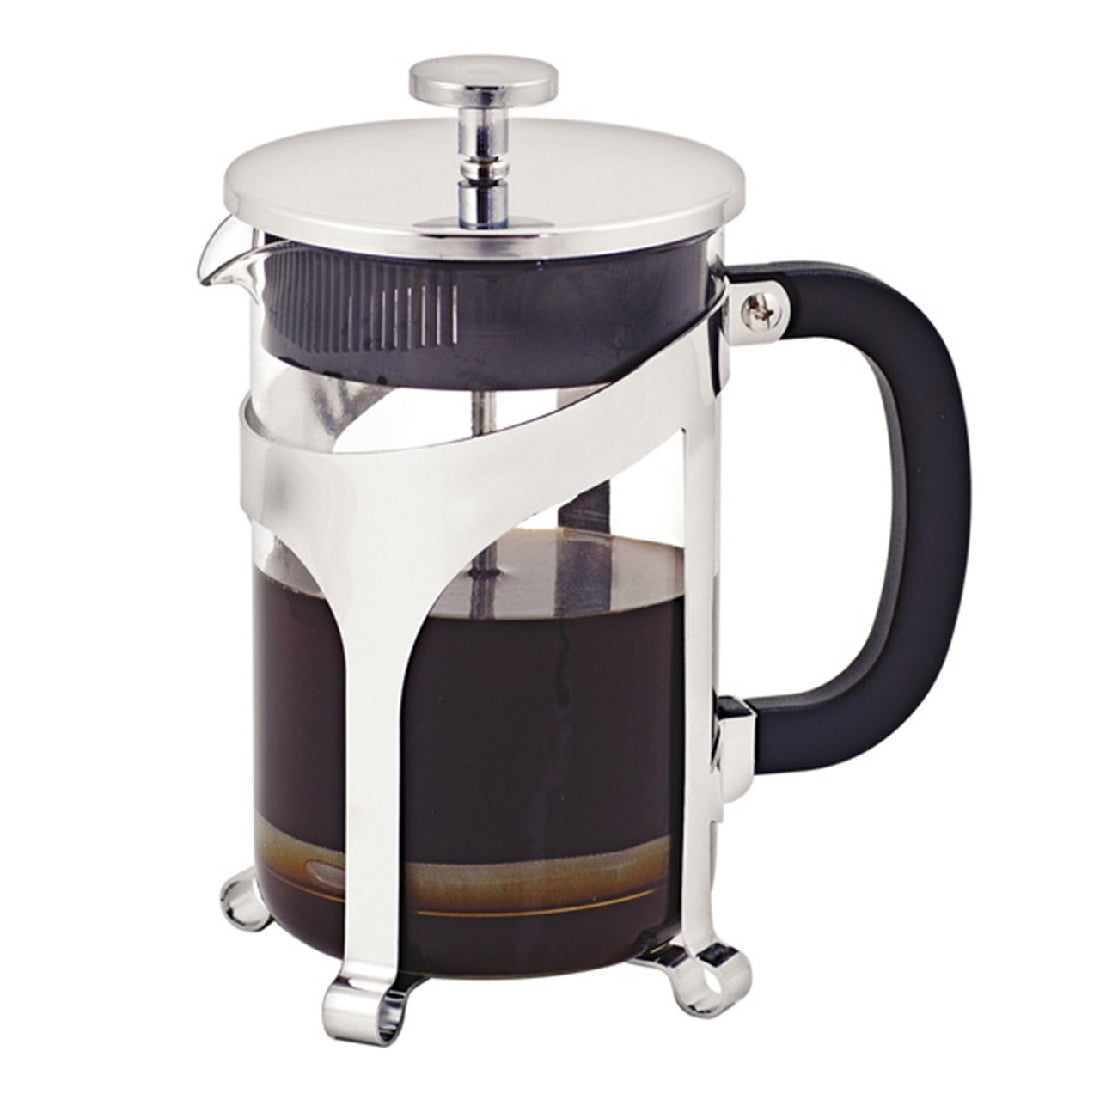 Avanti Cafe Press Coffee Plunger 750ml - 6 Cup